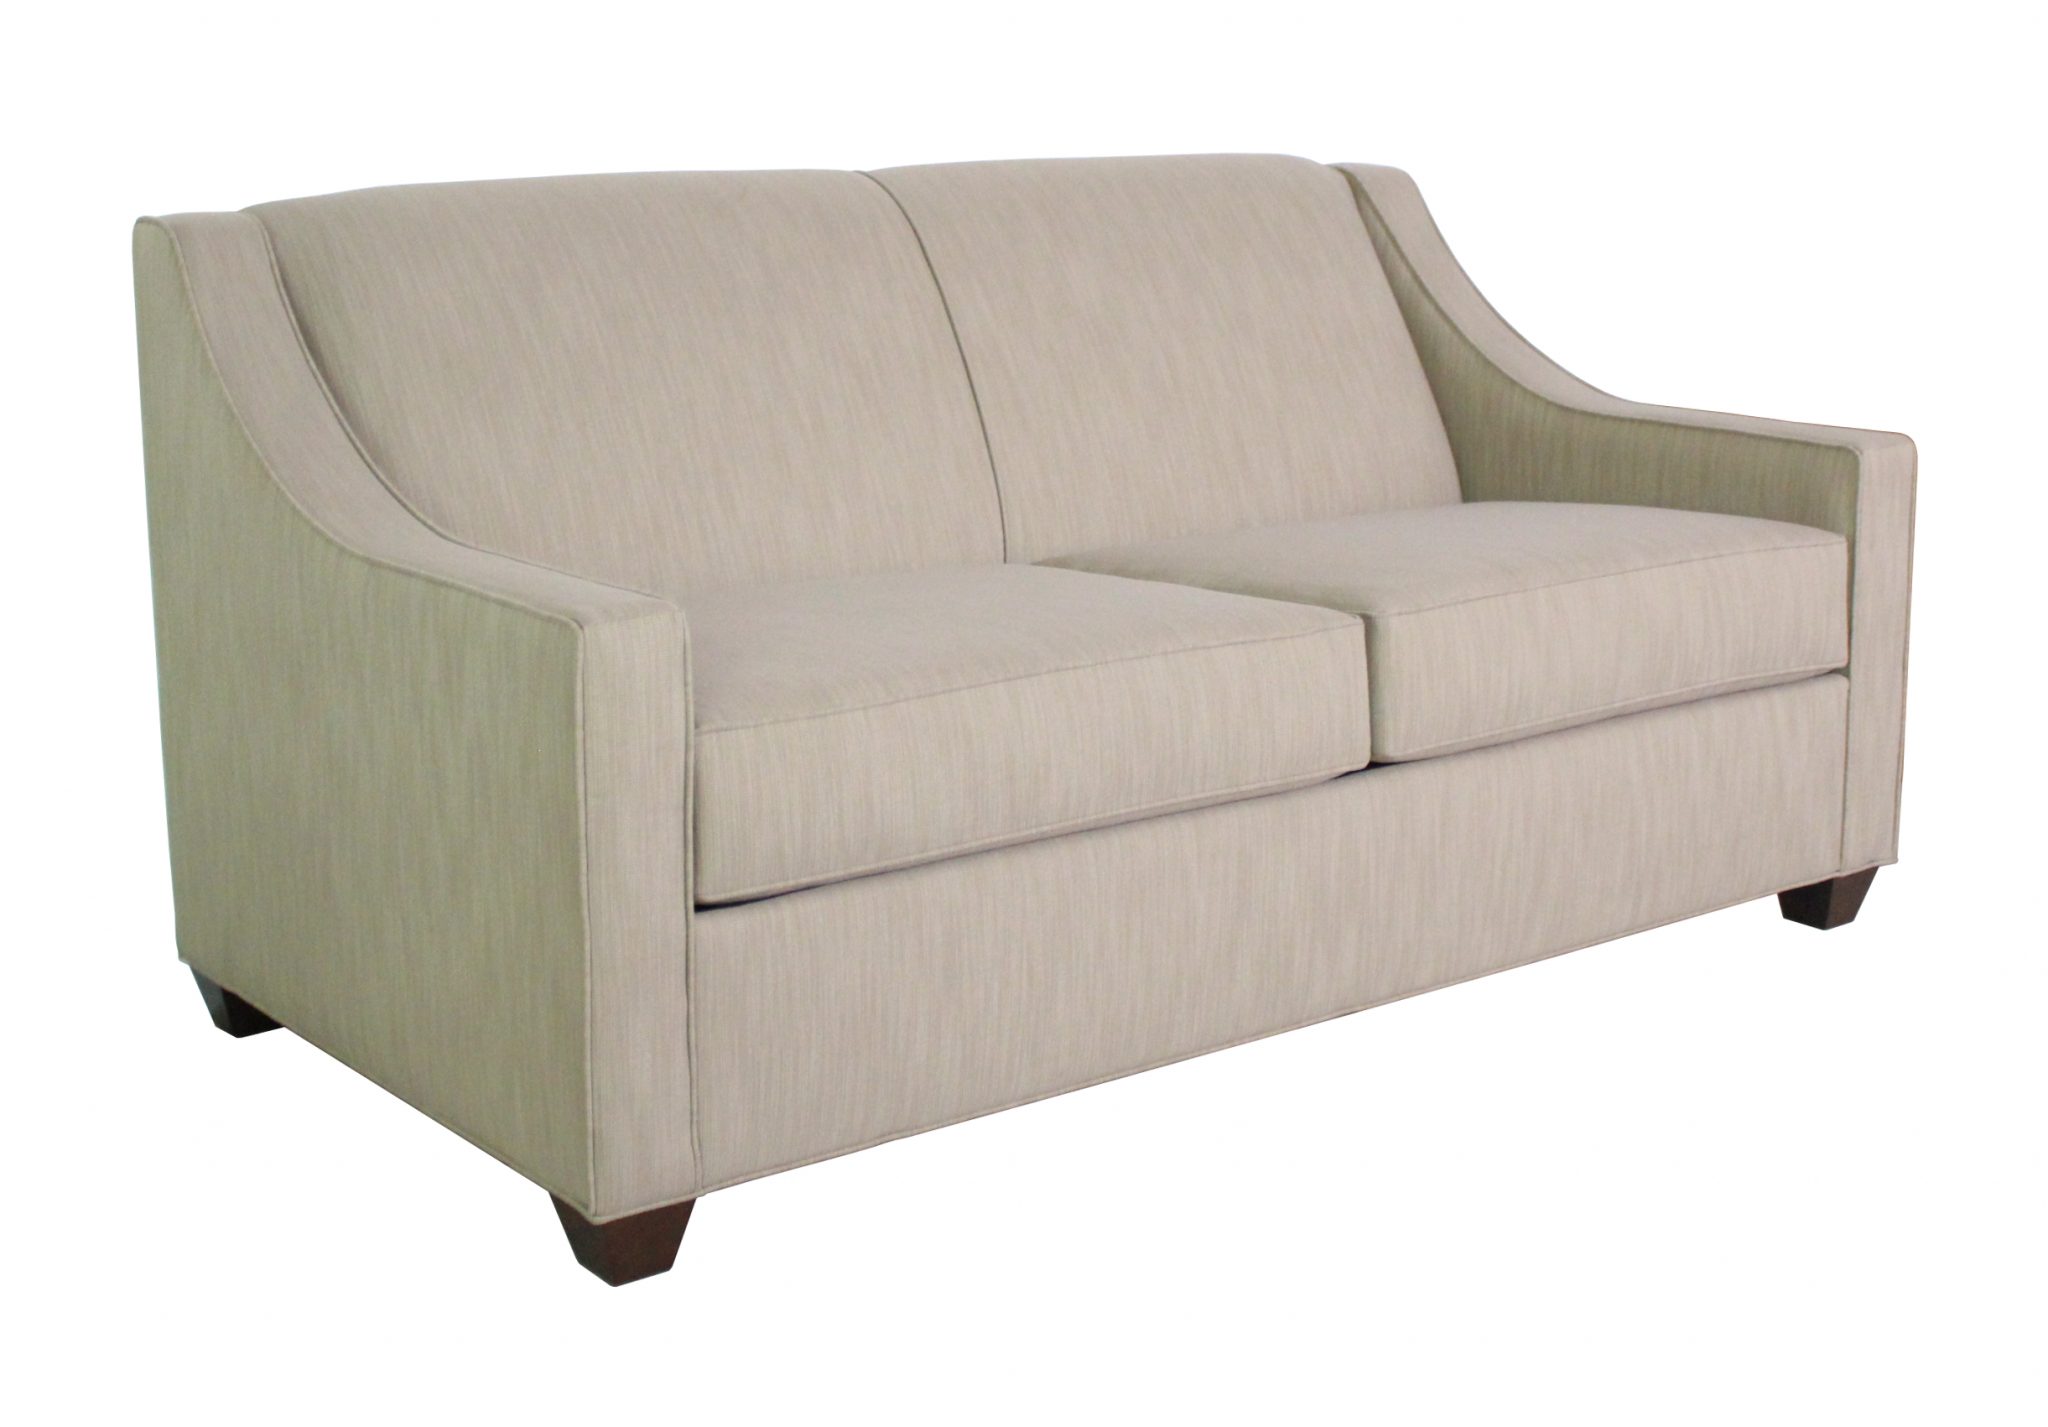 edgecombe furniture grace sofa bed